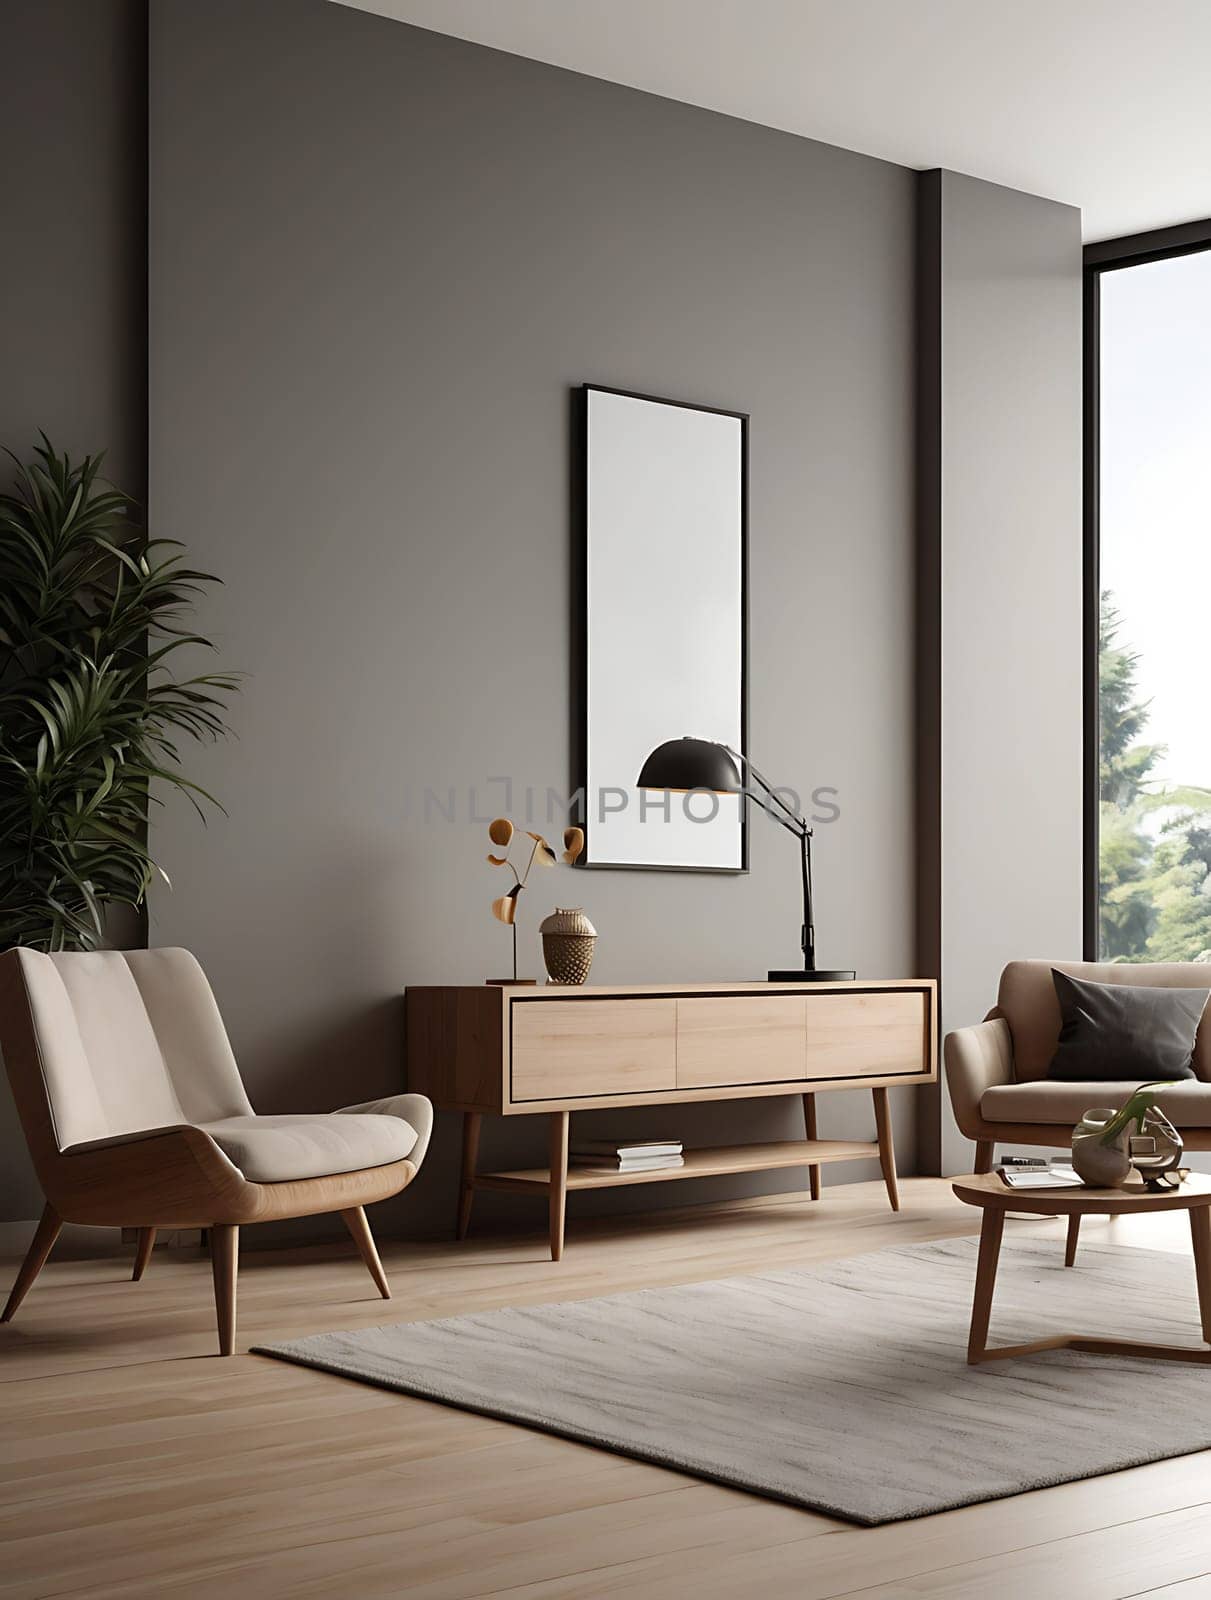 Blank empty cabinet wall mockup in modern minimalist interior design style. Contemporary living room interior concept. by maenjari